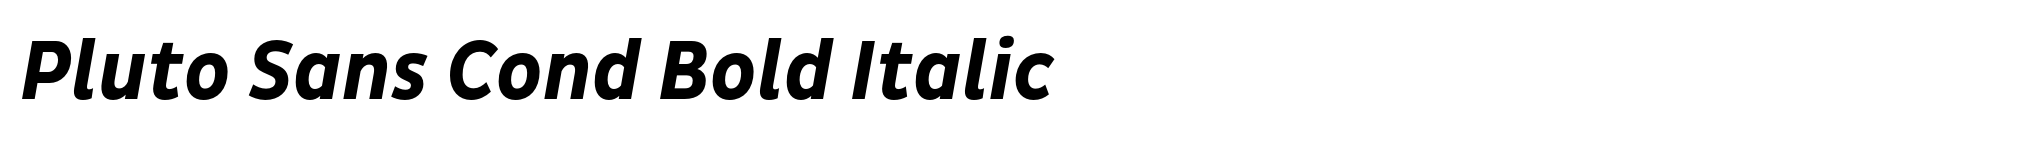 Pluto Sans Cond Bold Italic image